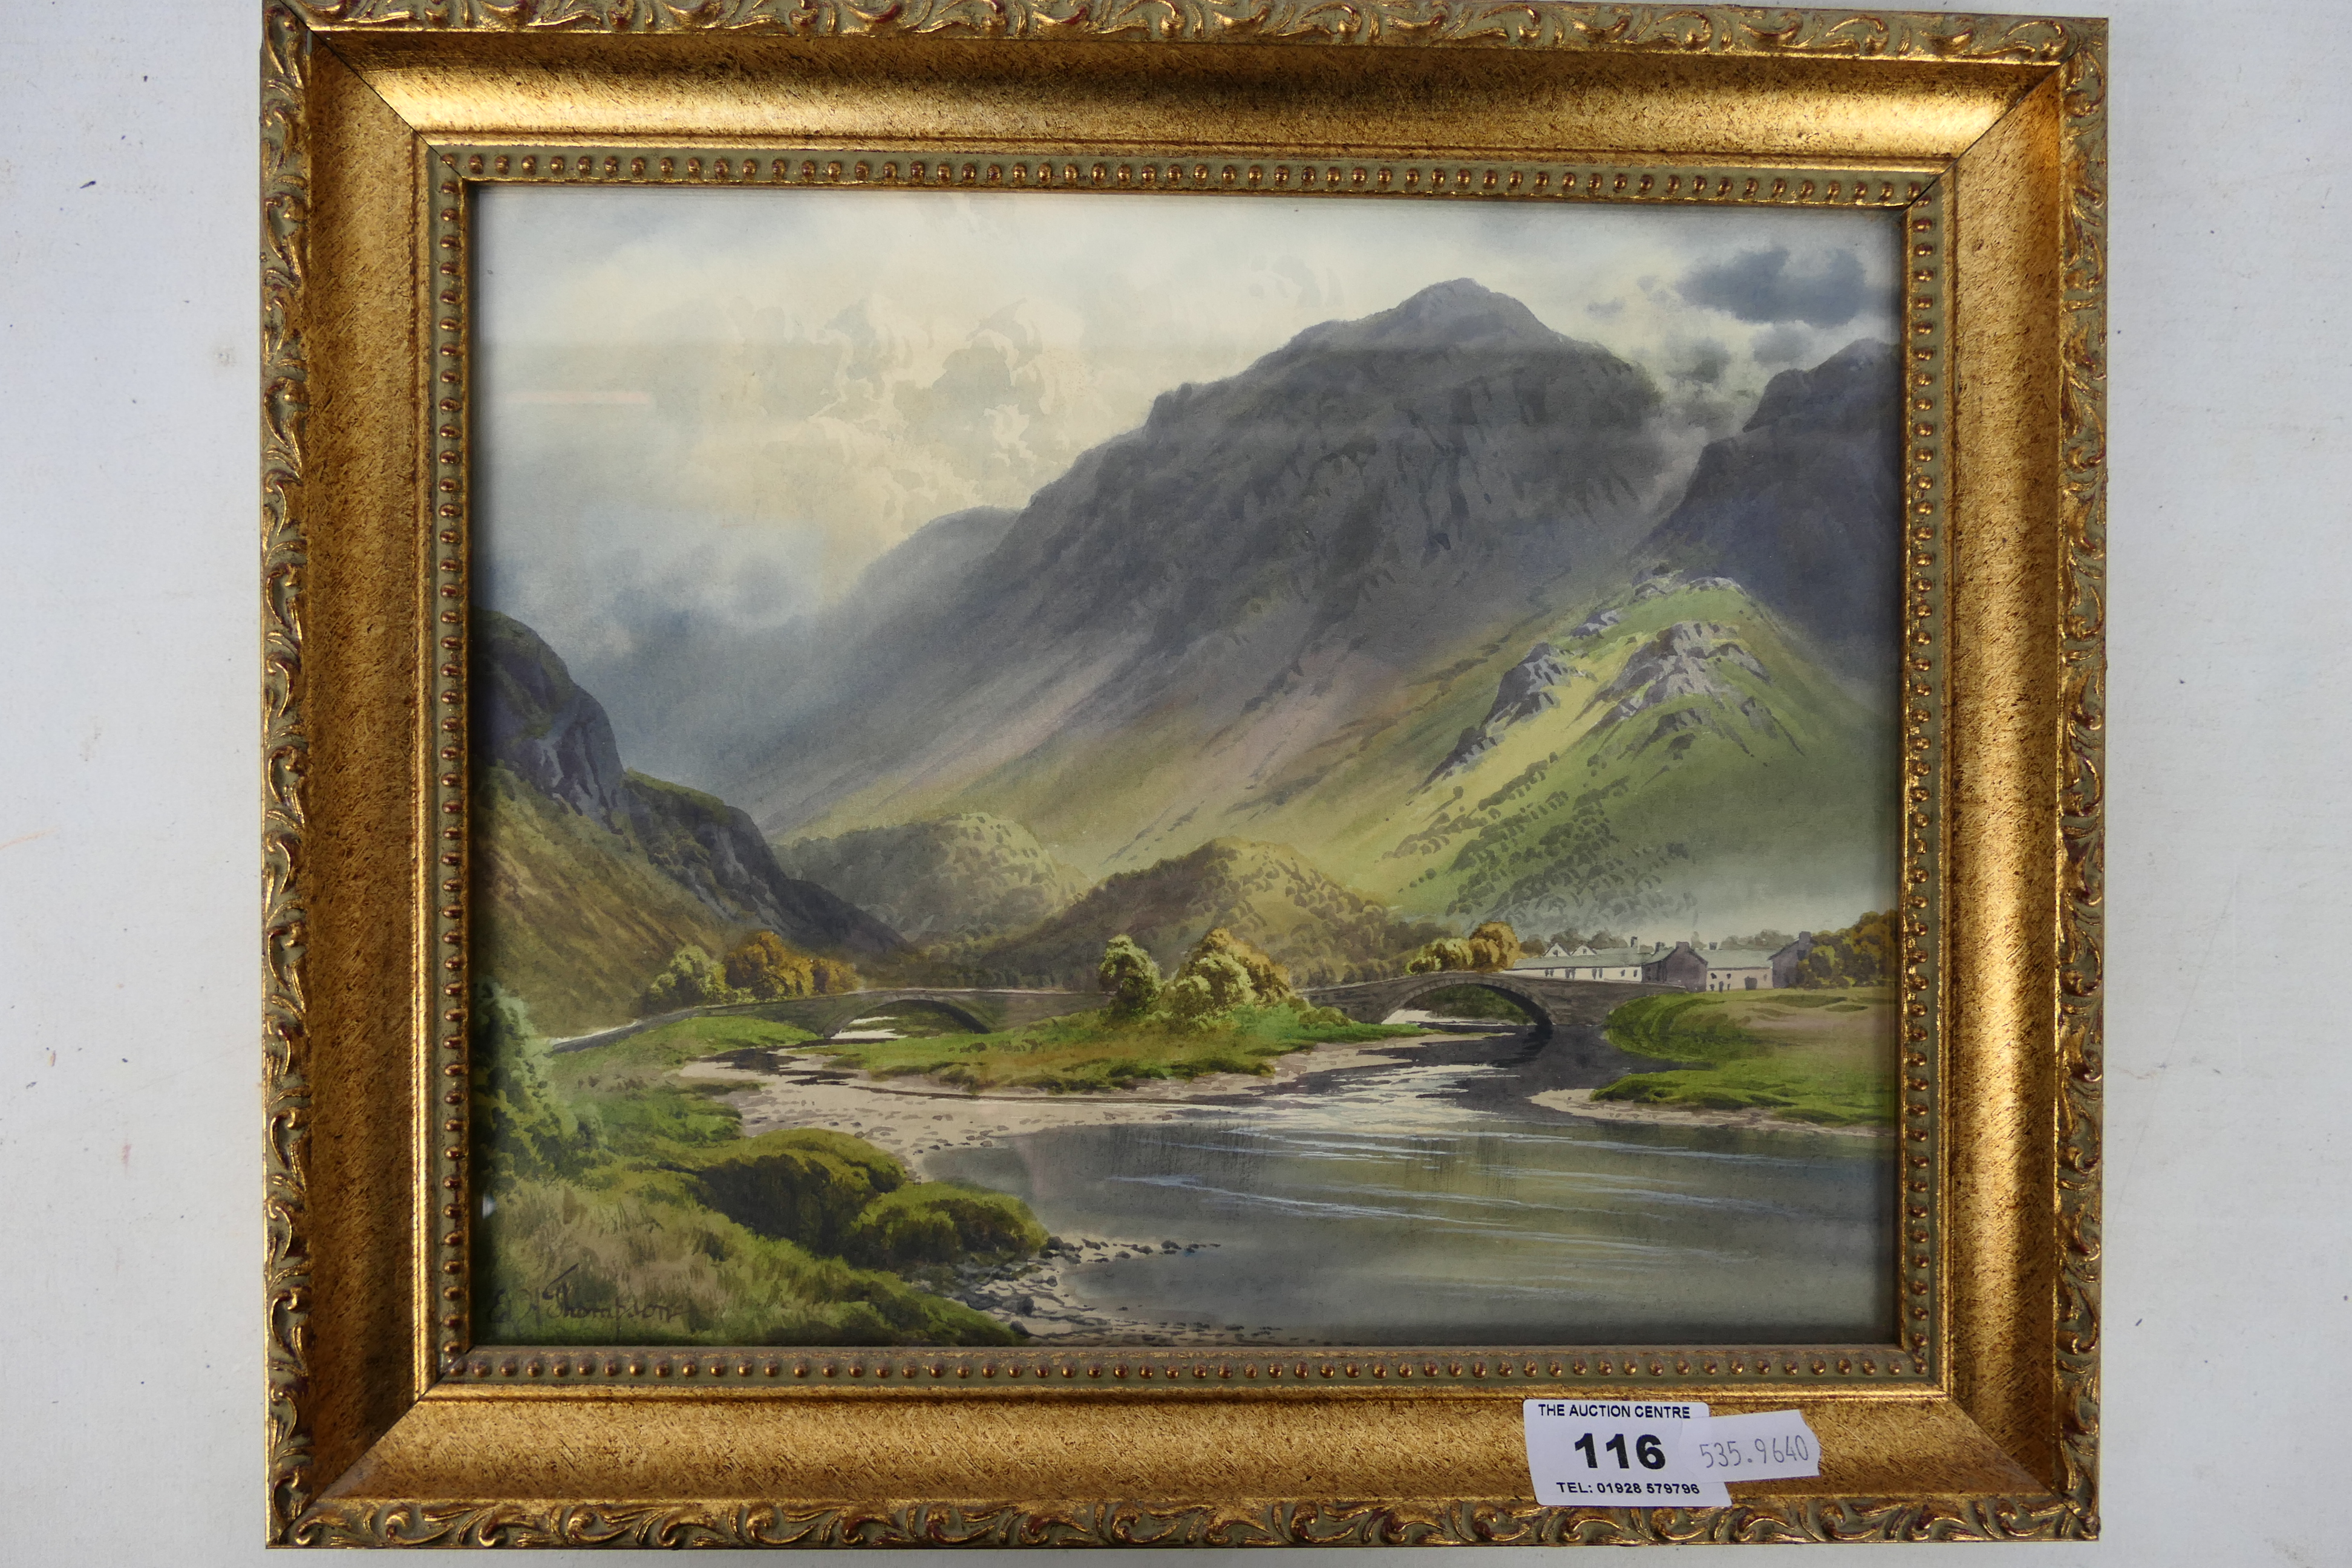 Edward Horace Thompson (1879-1949) - A lakeside watercolour landscape scene entitled